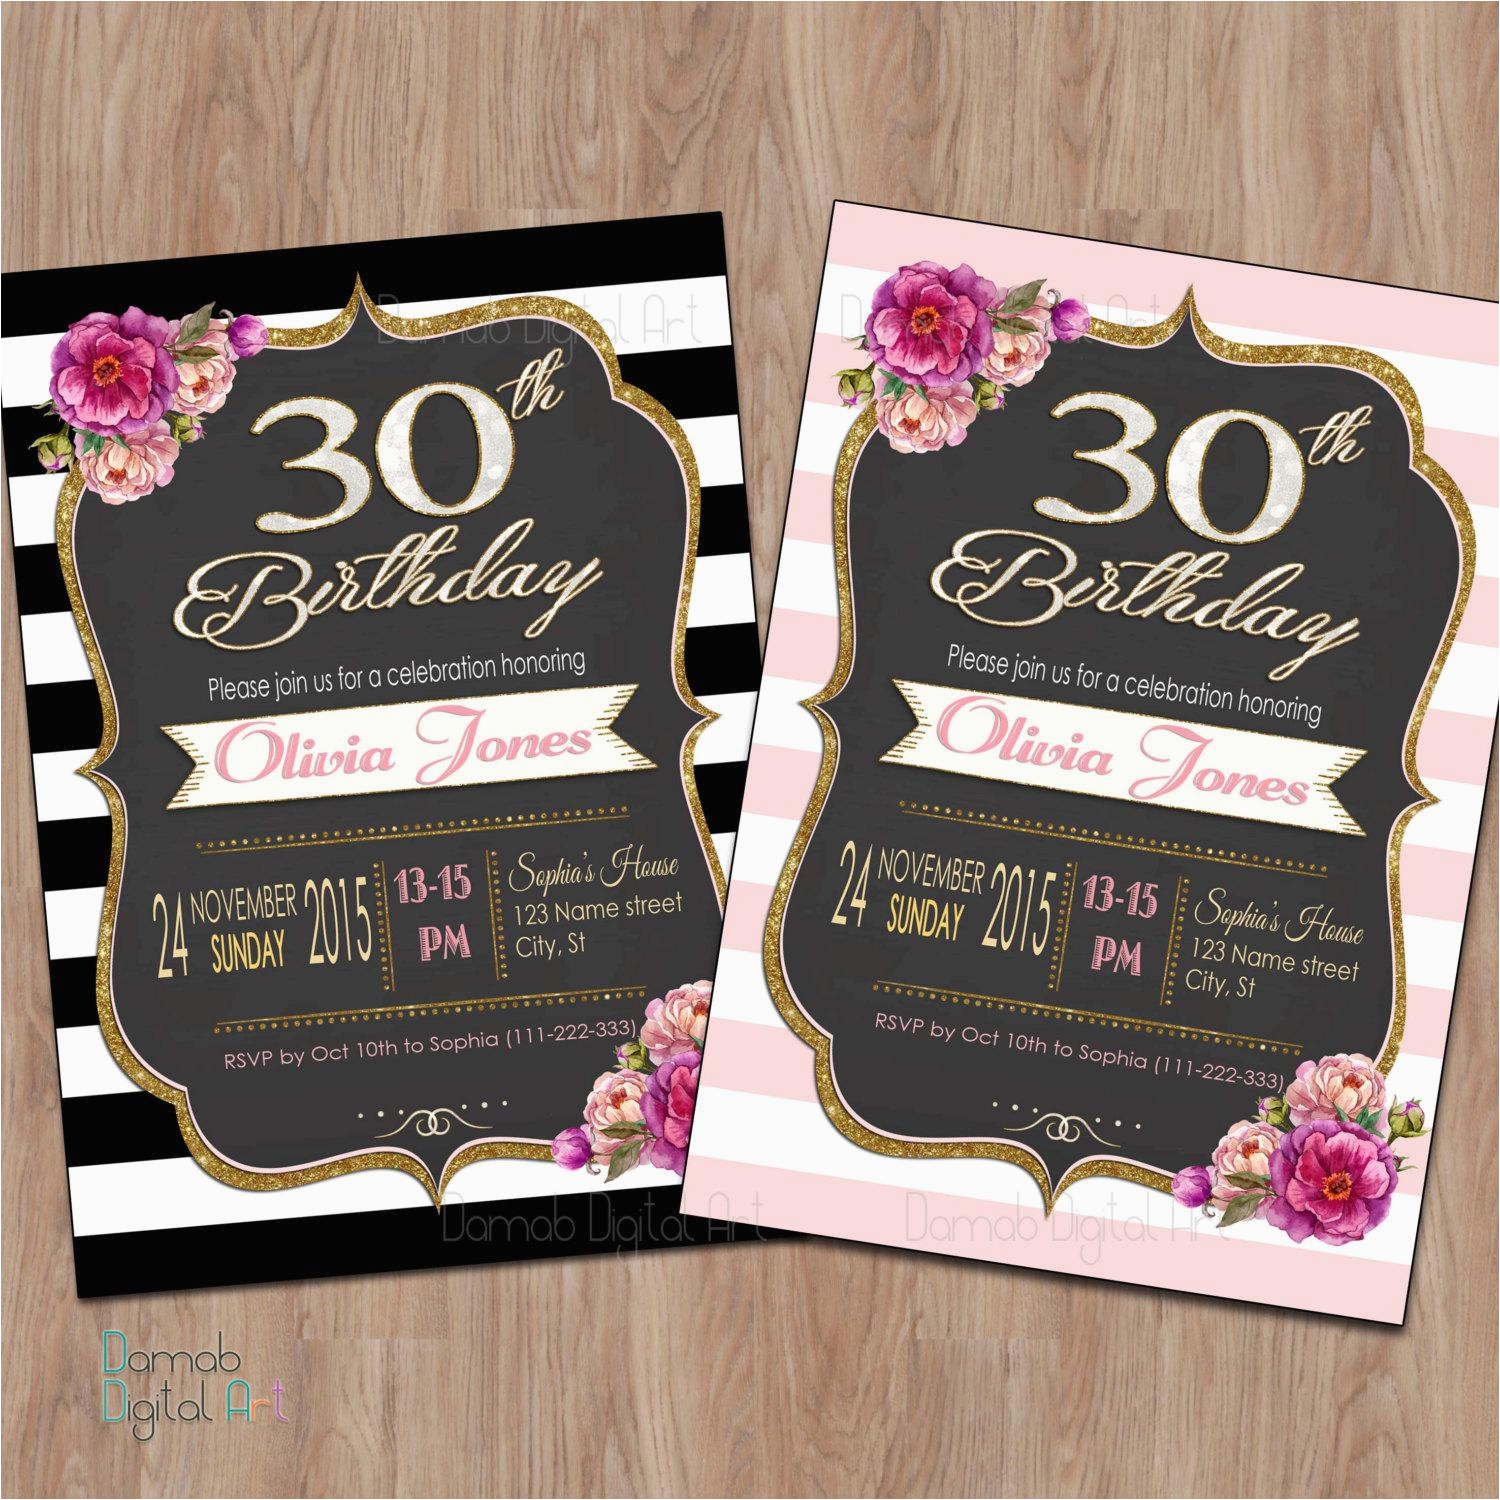 30th-birthday-invitation-wording-samples-birthdaybuzz